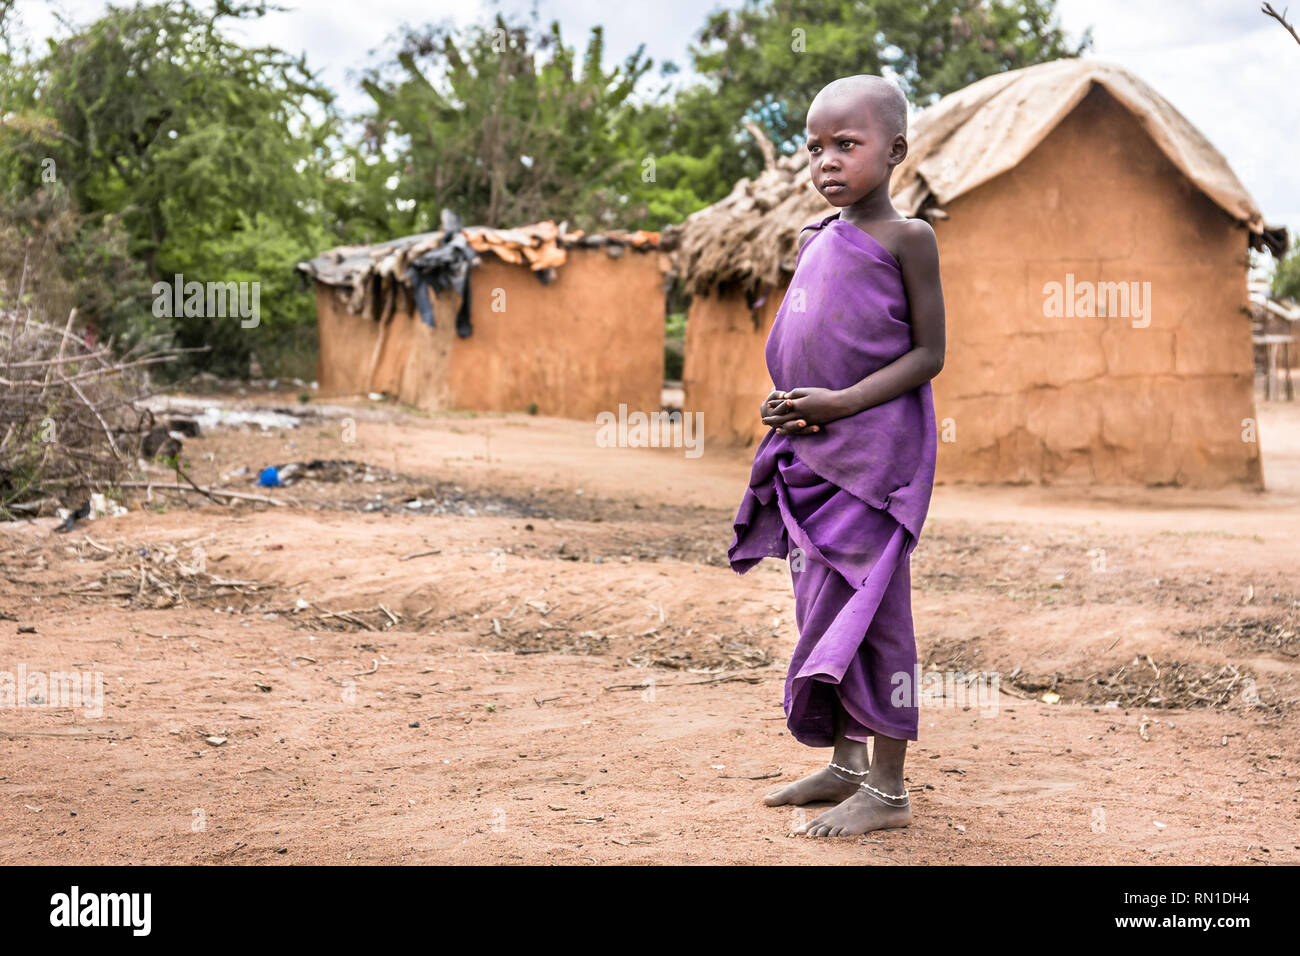 MASAI VILLAGE, KENYA - OCTOBER 11, 2018: Unindentified african child wearing traditional clothes in Masai tribe, Kenya Stock Photo